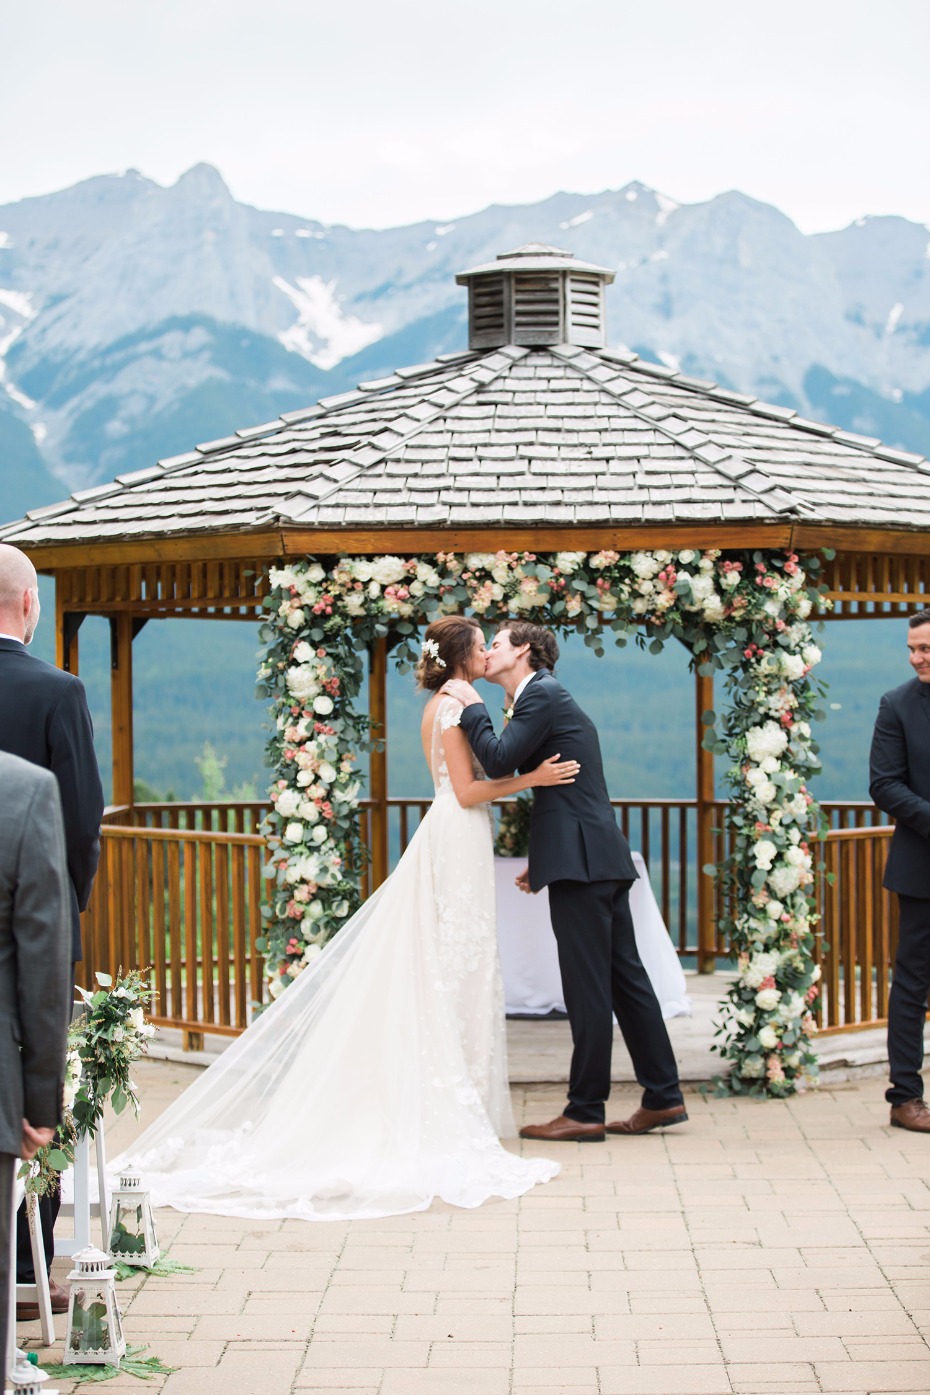 A gazebo wedding in the Canadian Rockies